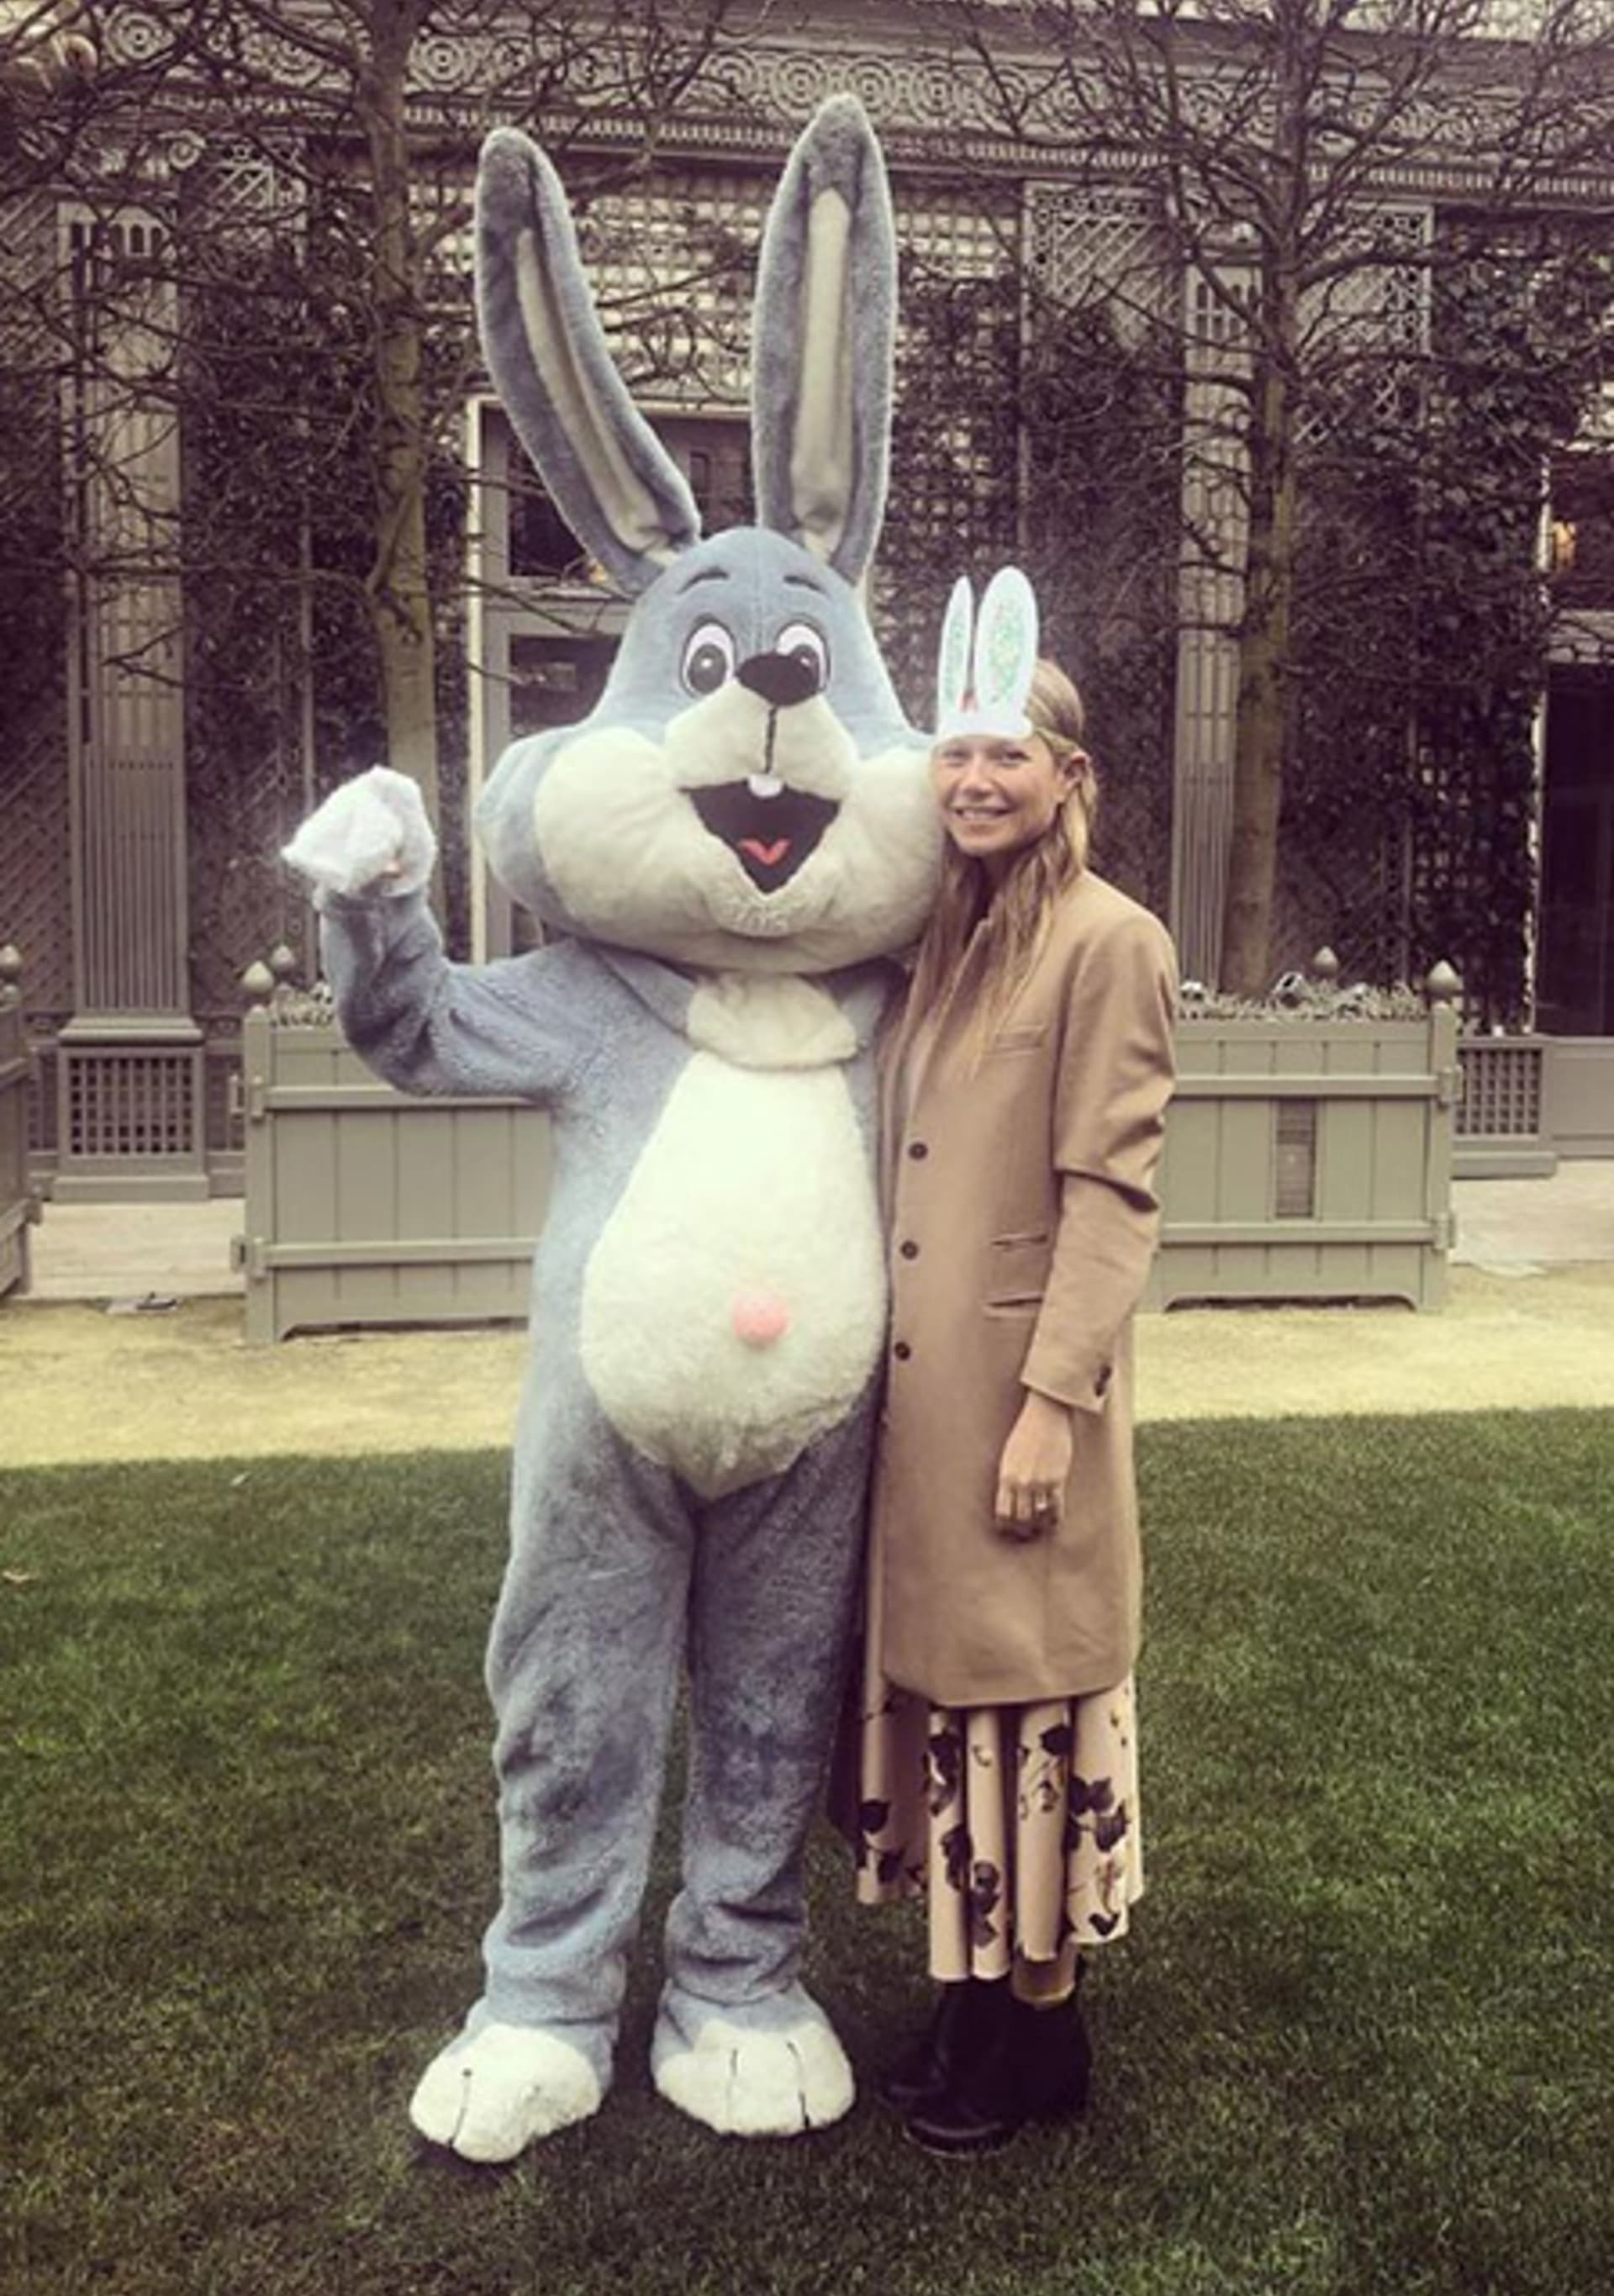 Gwyneth Paltrow si zas užívala se zajíčkem...